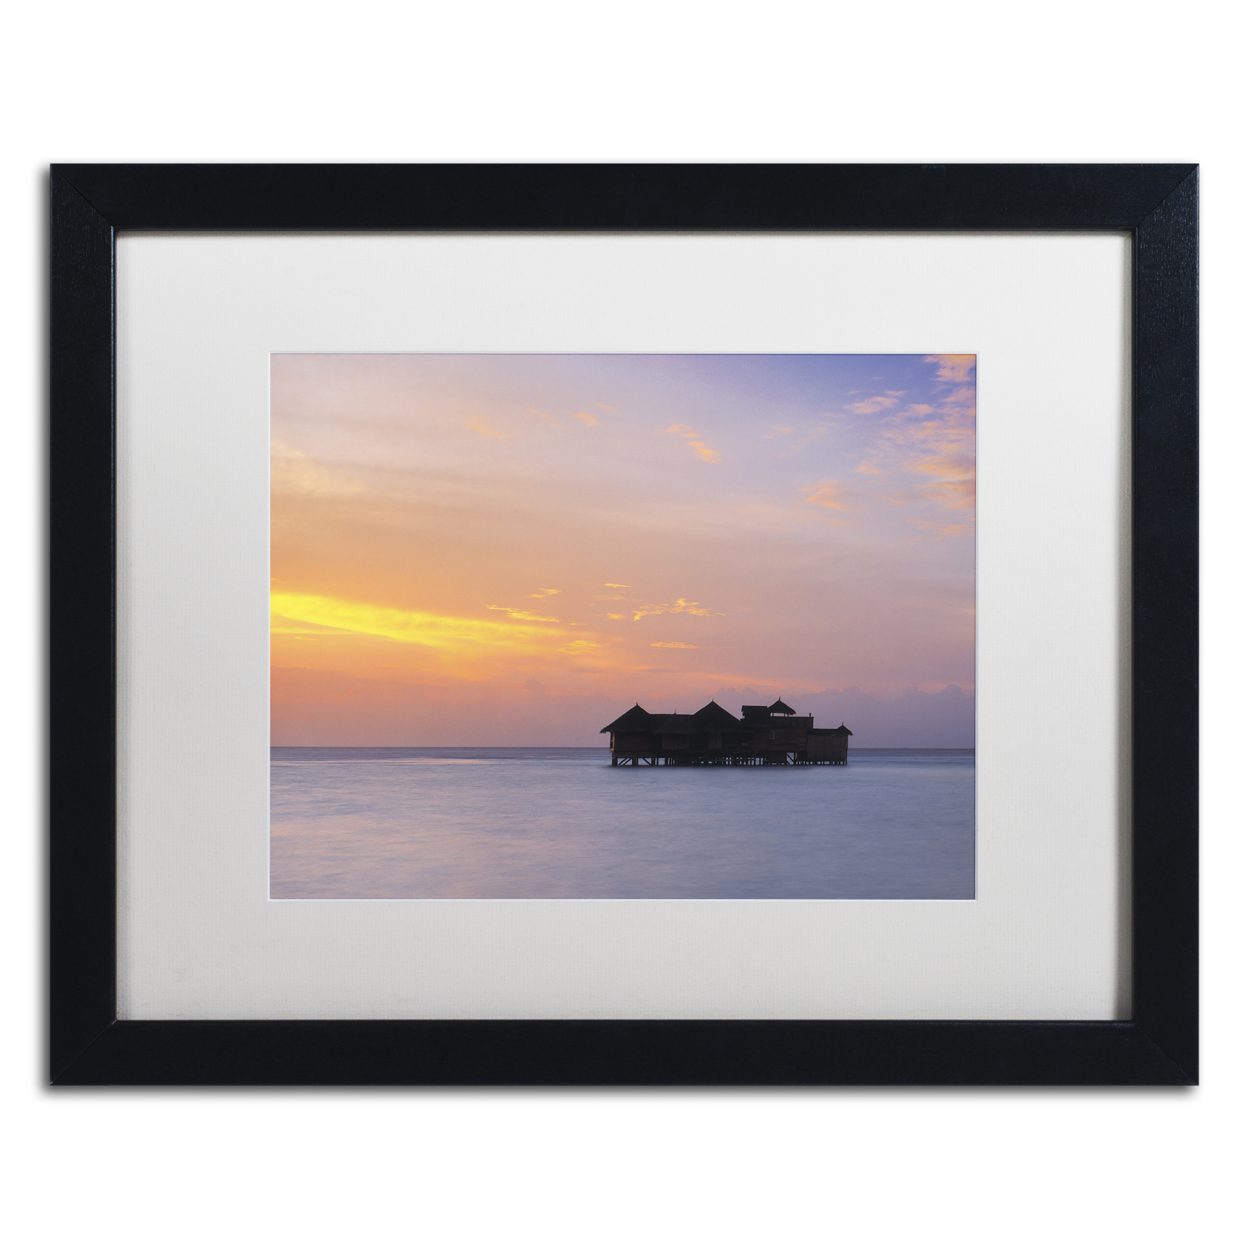 David Evans 'Sunset Solitude-Maldives' Black Wooden Framed Art 18 X 22 Inches